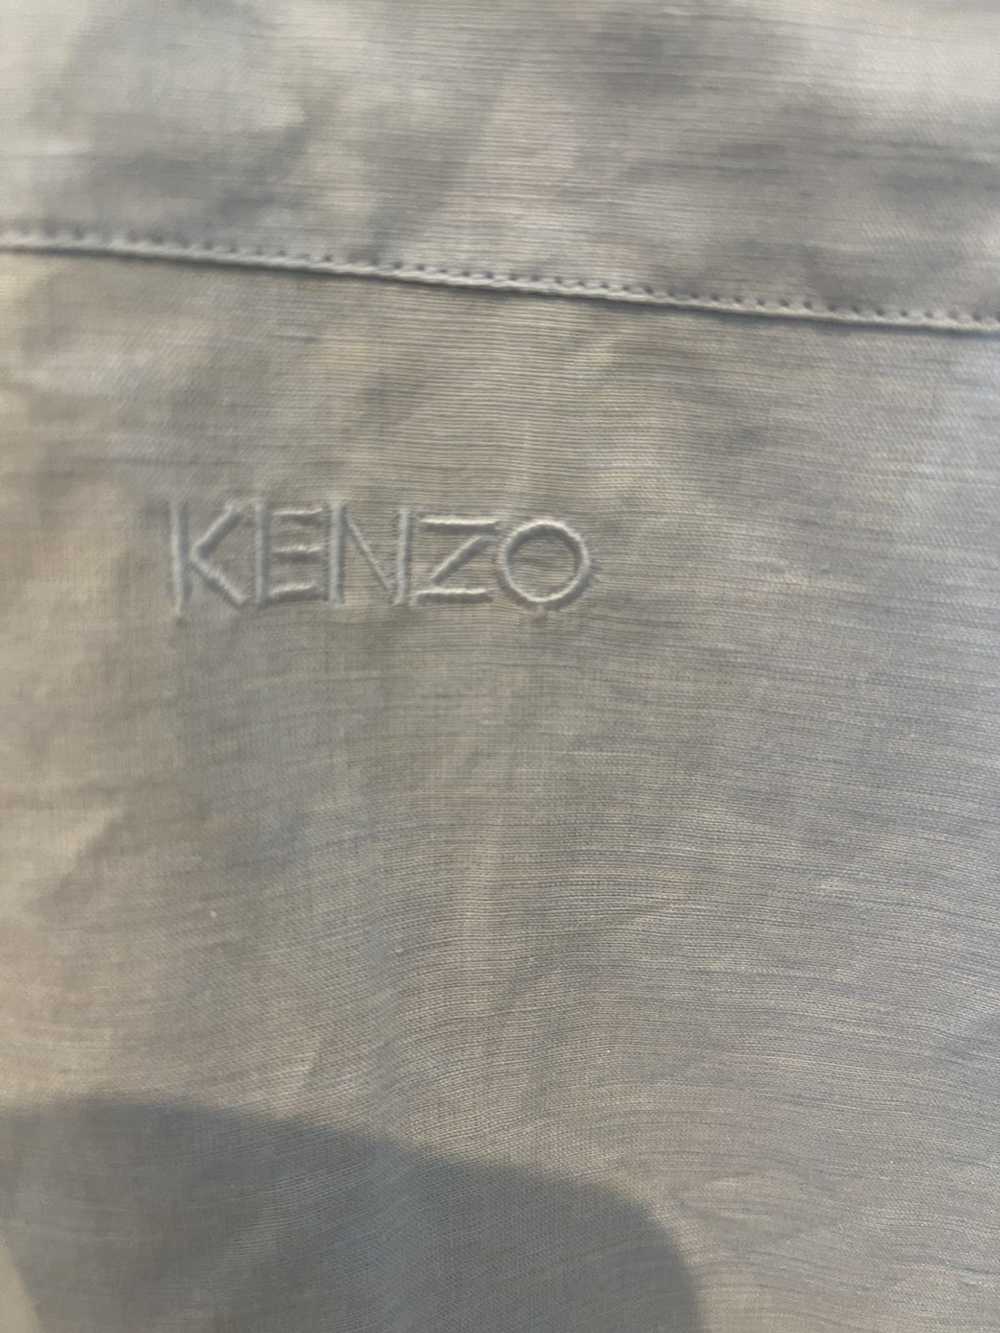 Kenzo Kenzo button up - image 2